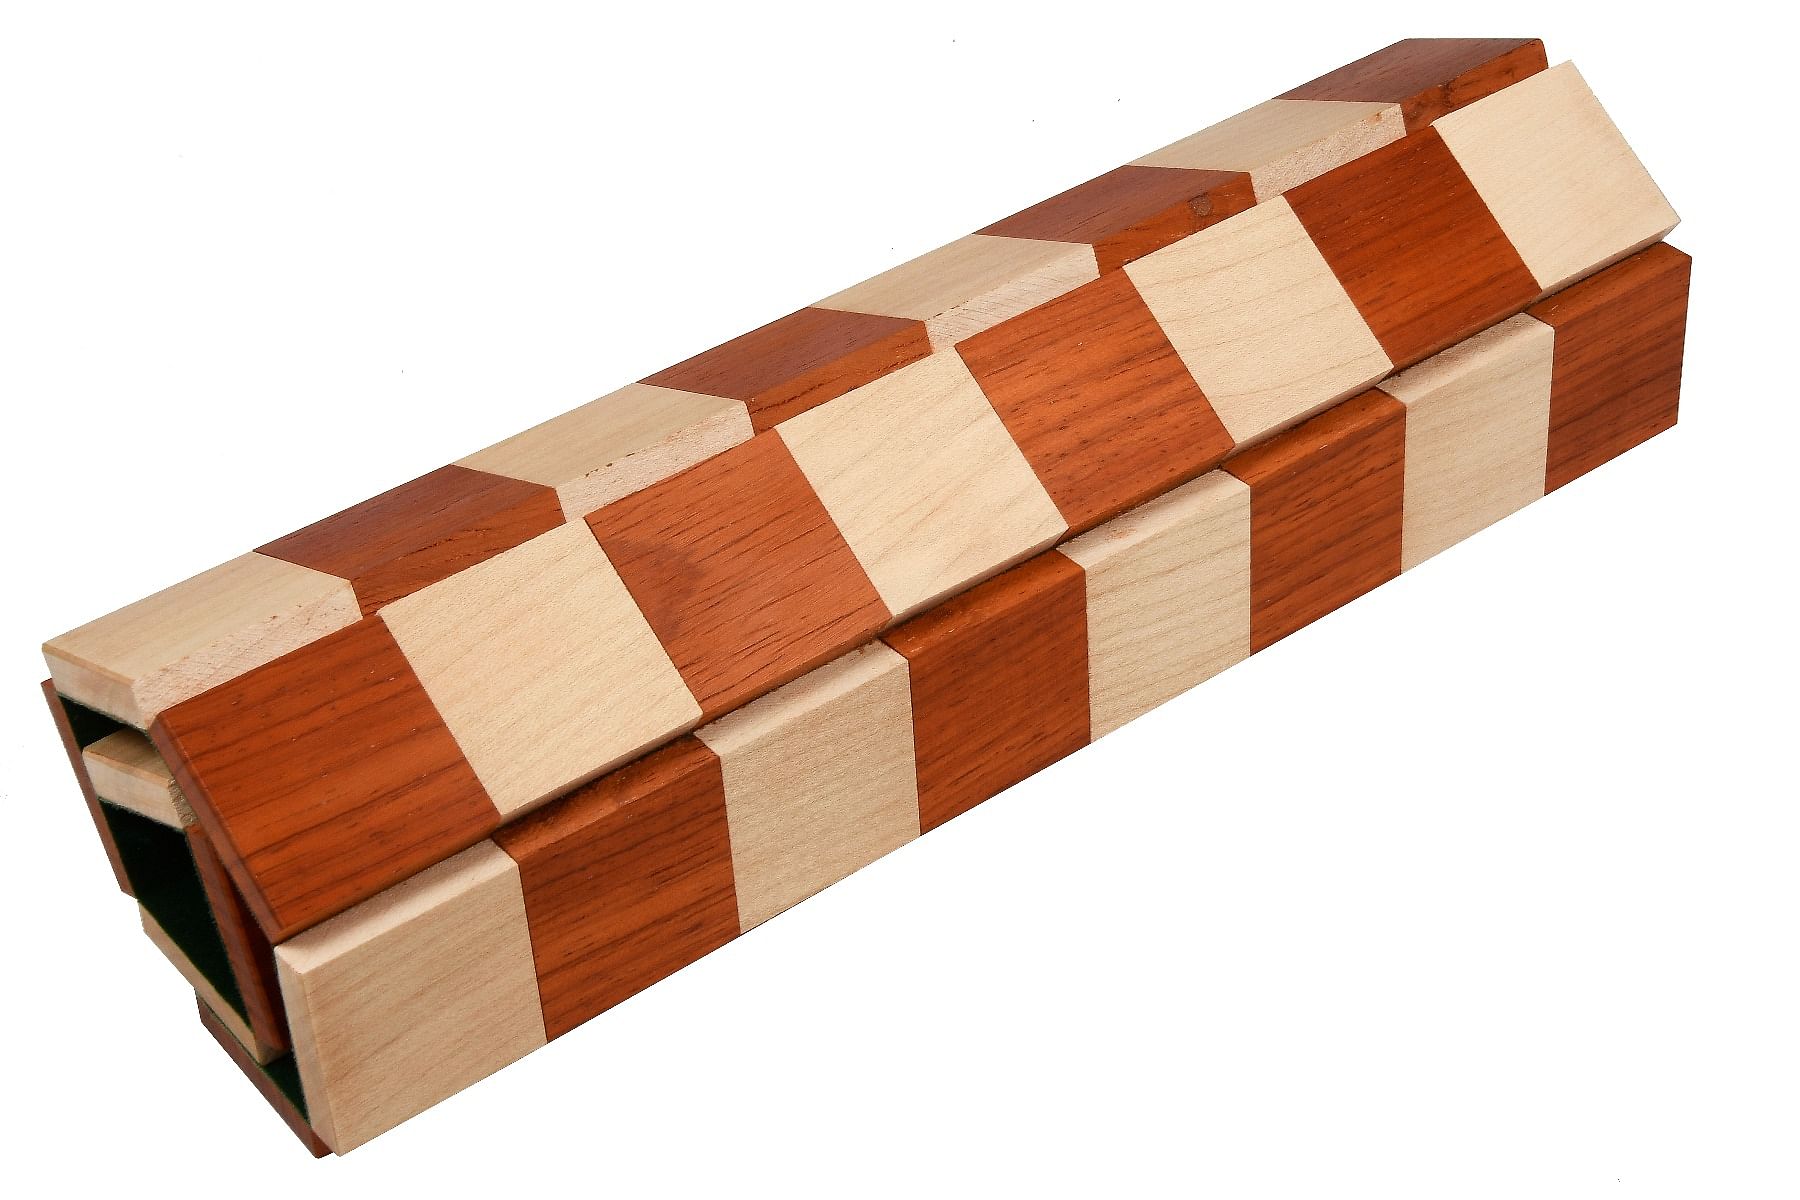 Folding Wooden Chess Board in Bud Rose Solid Wood (Padauk) & Maple Wood 12.8